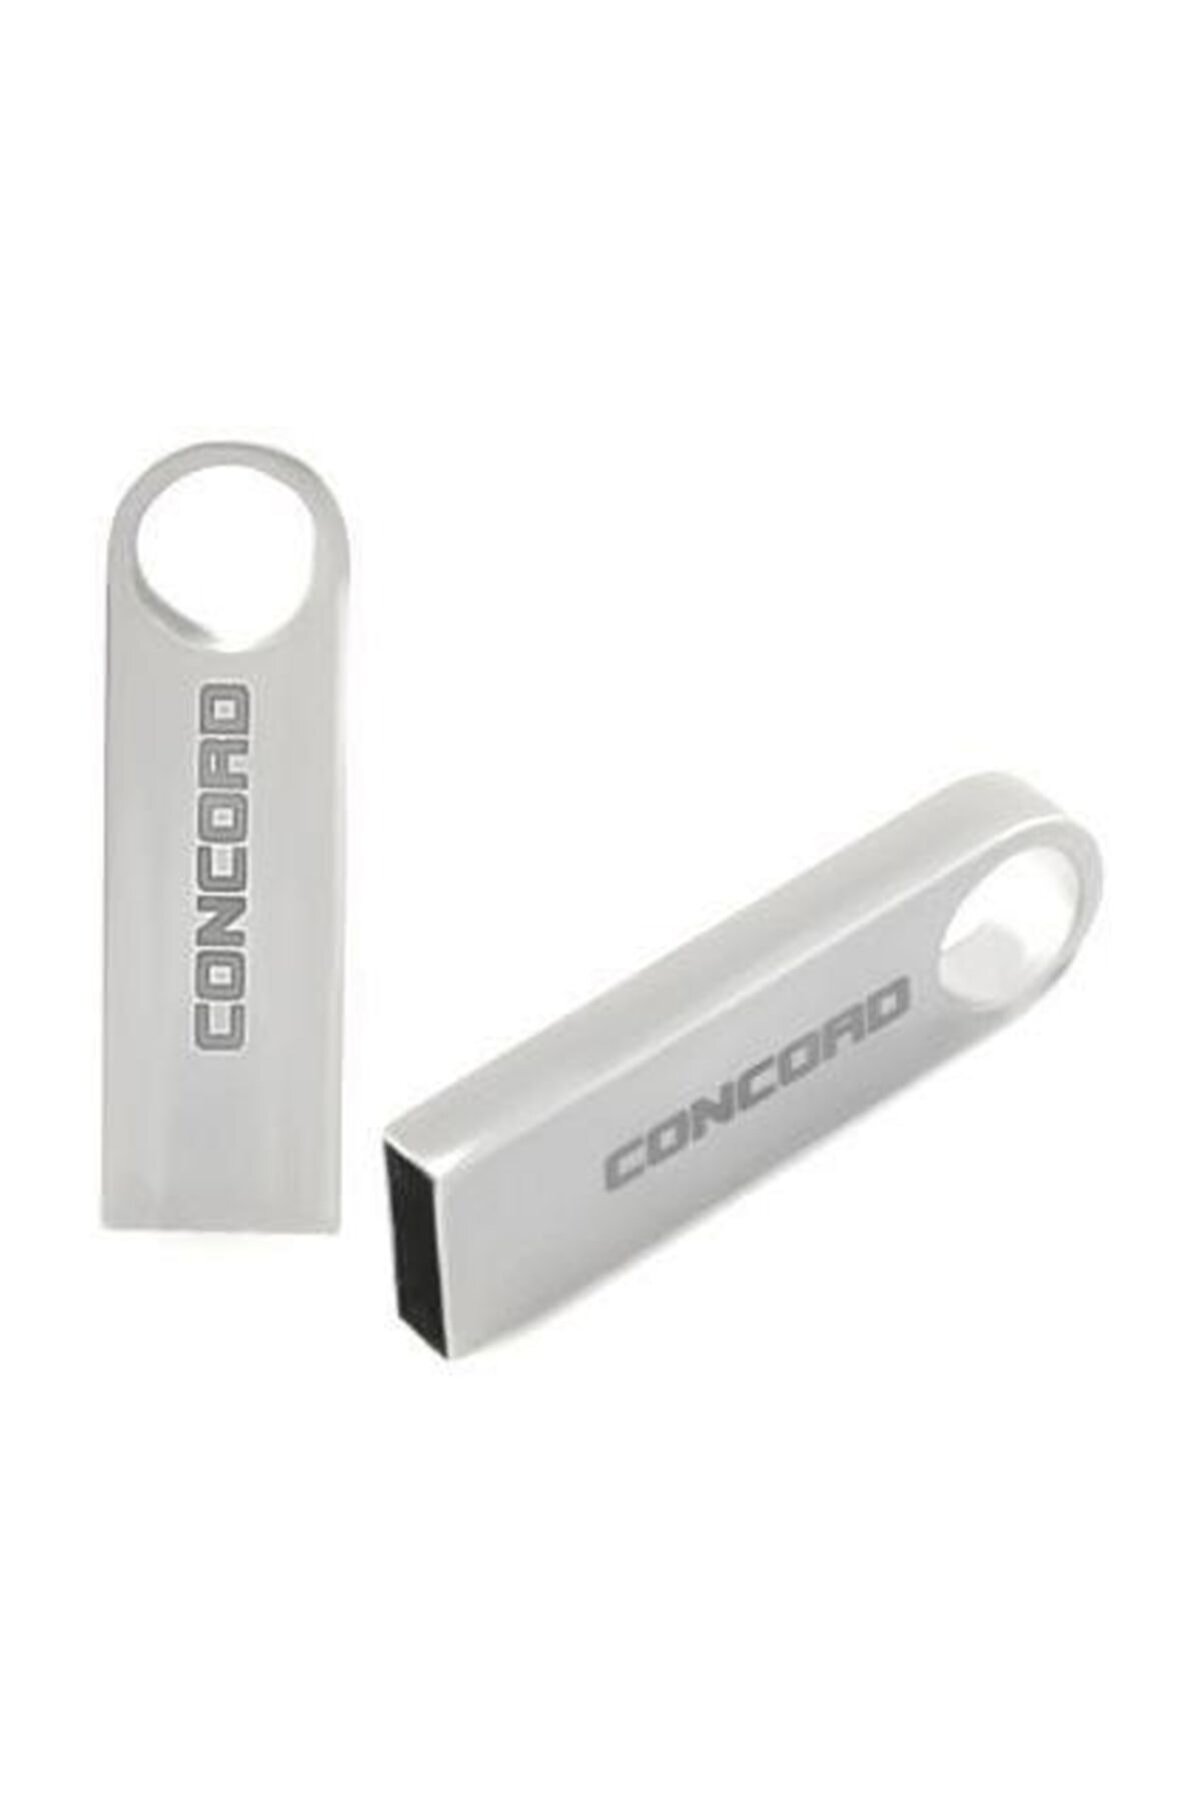 Concord 16 Gb Mini Cep Metal Kasa Flash Bellek 2 Yıl Garantili